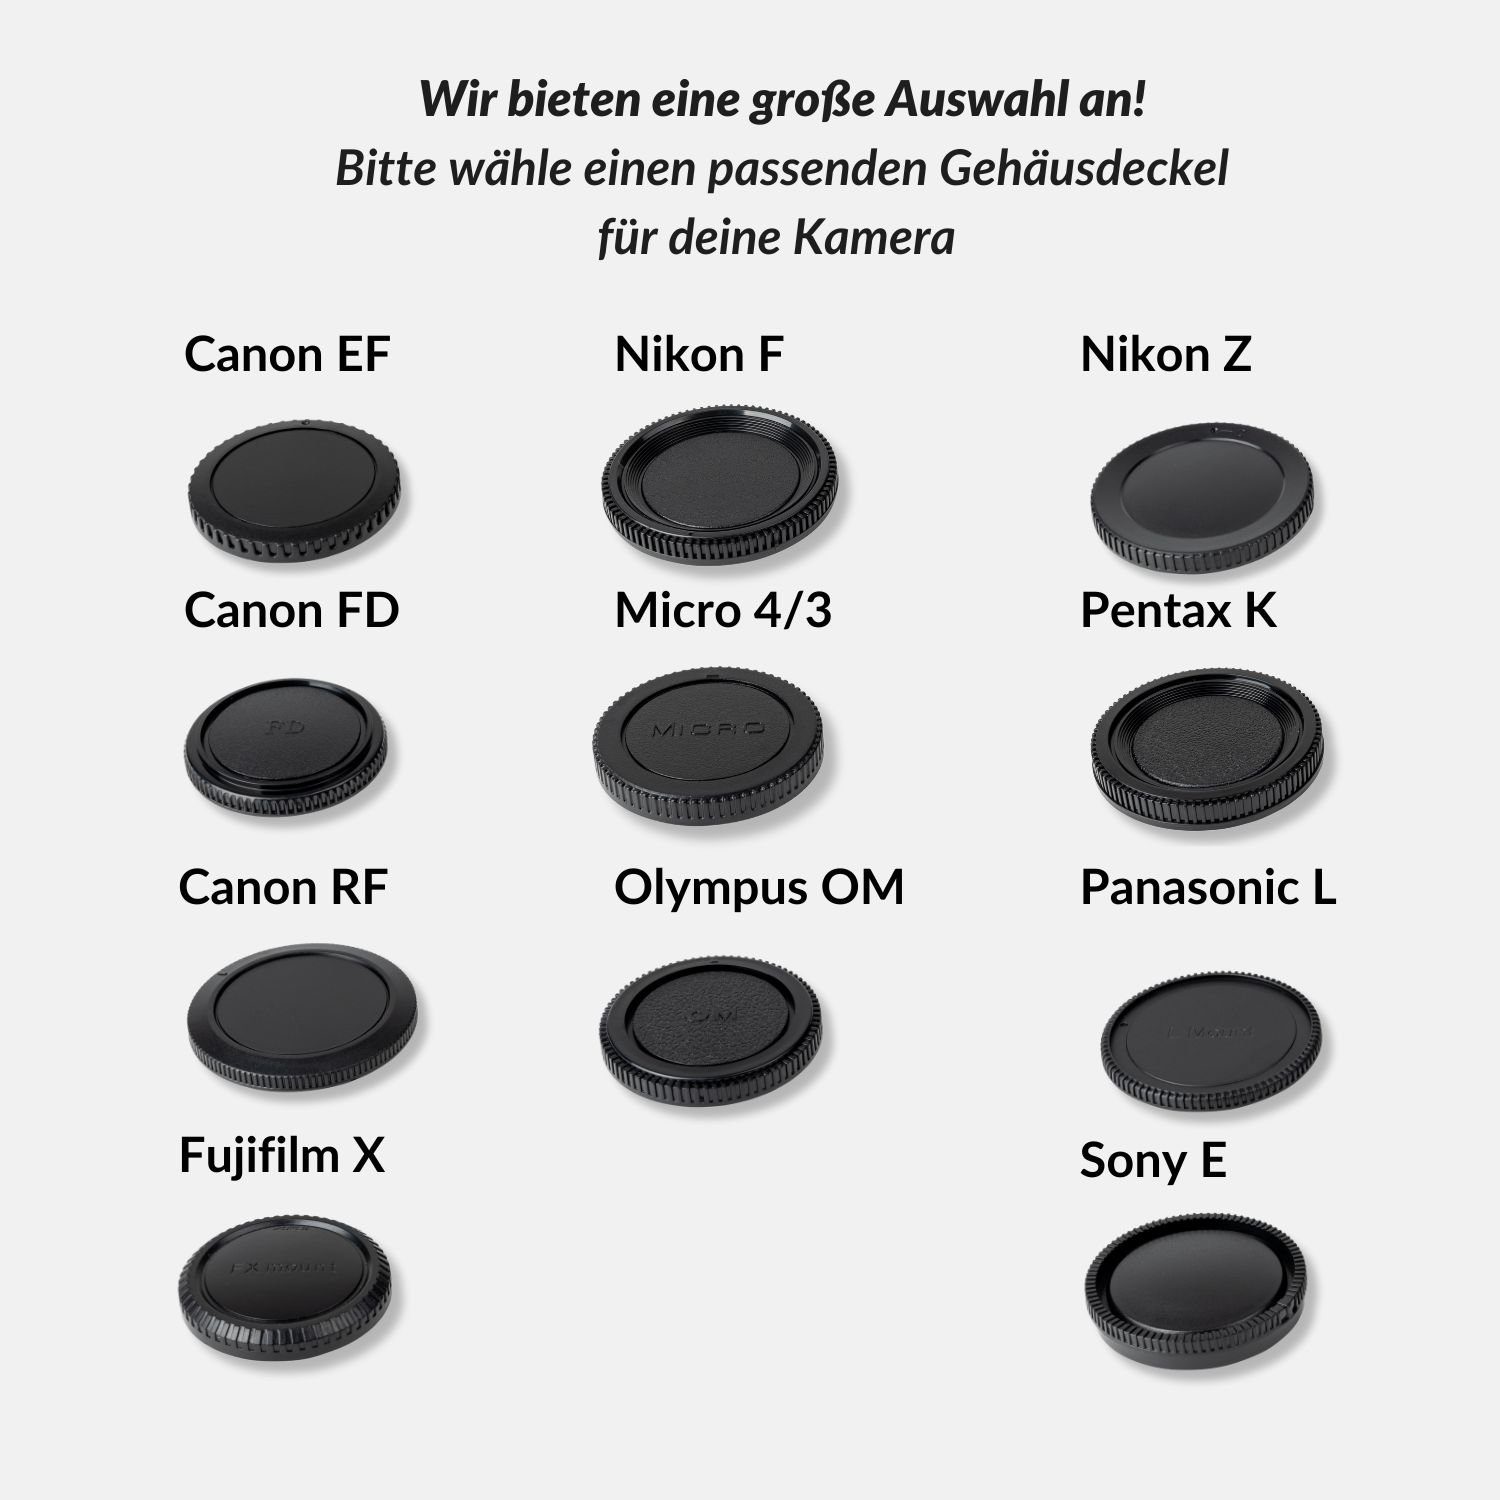 Nikon F-Bajonett, Lens-Aid Gehäusedeckel Body Cap, Systemkamera DSLR, für